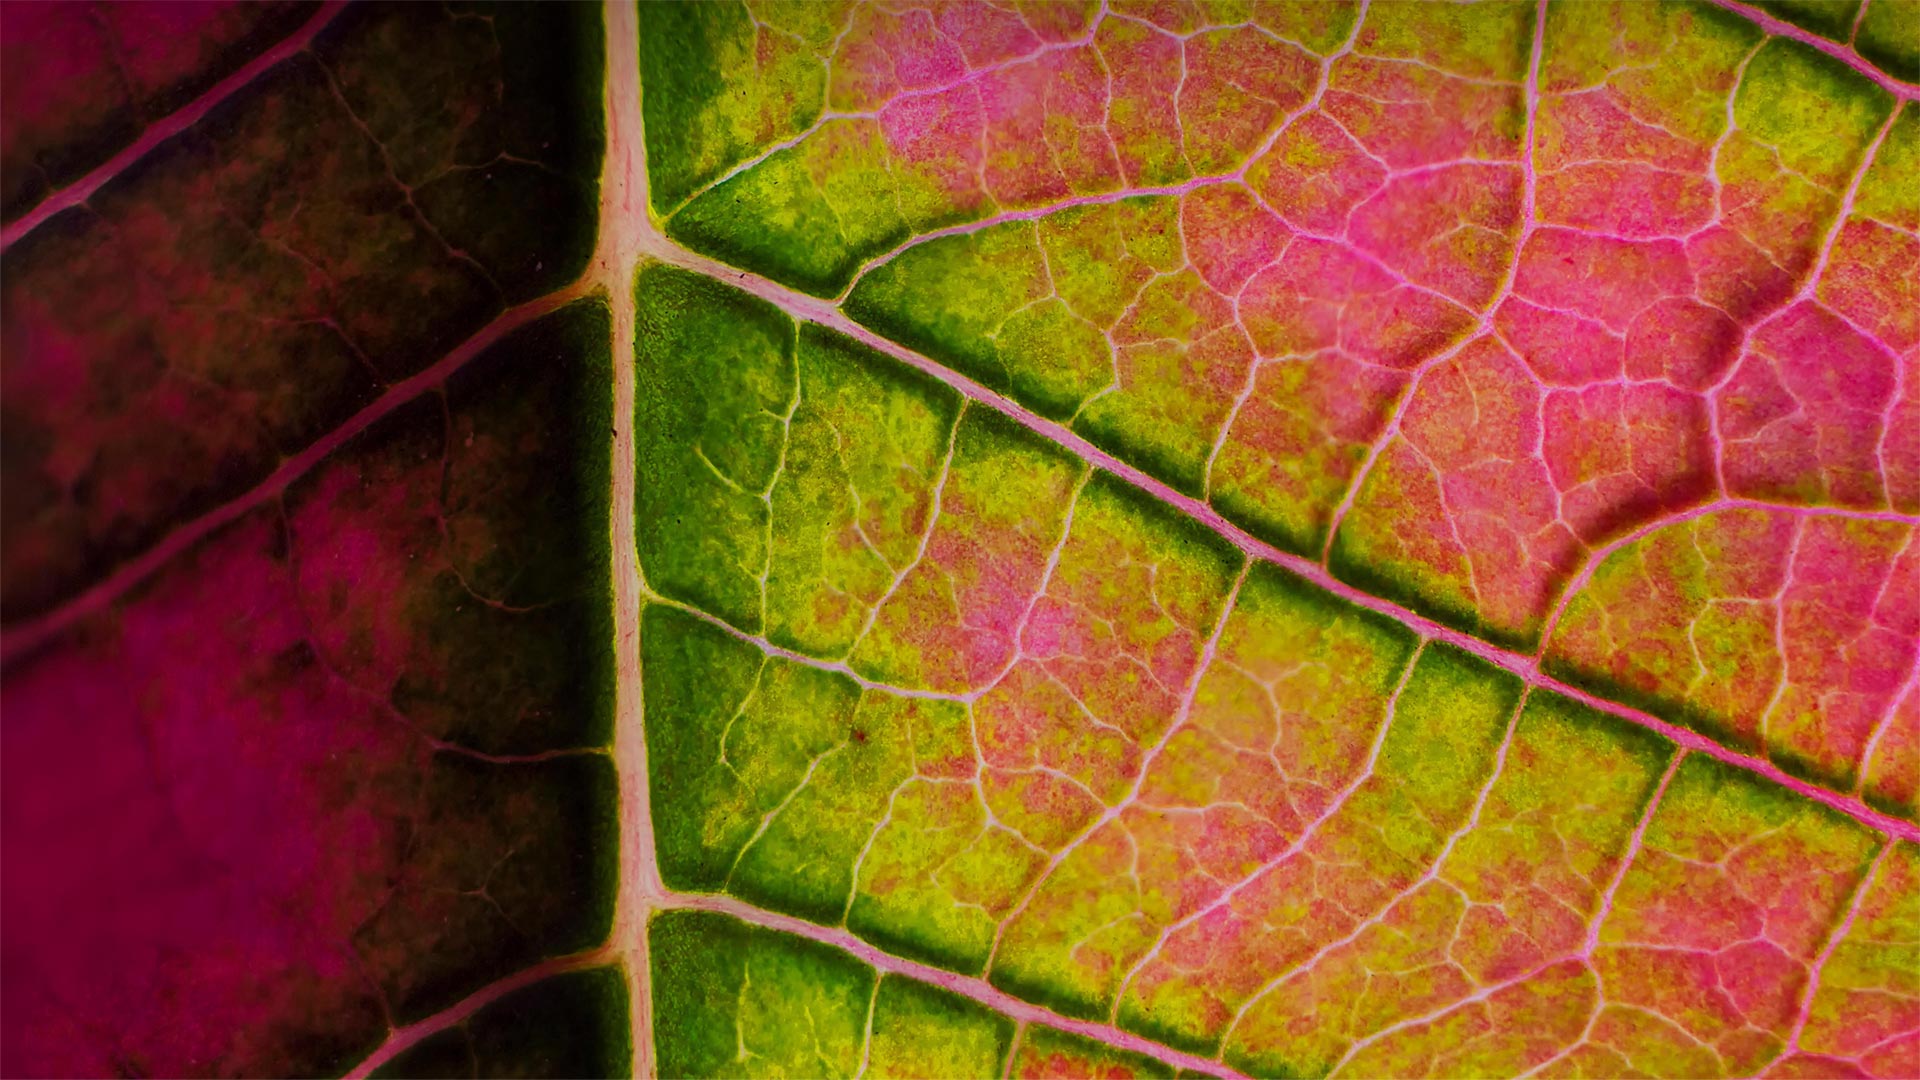 Poinsettia leaf close-up - Charles Floyd/Alamy)